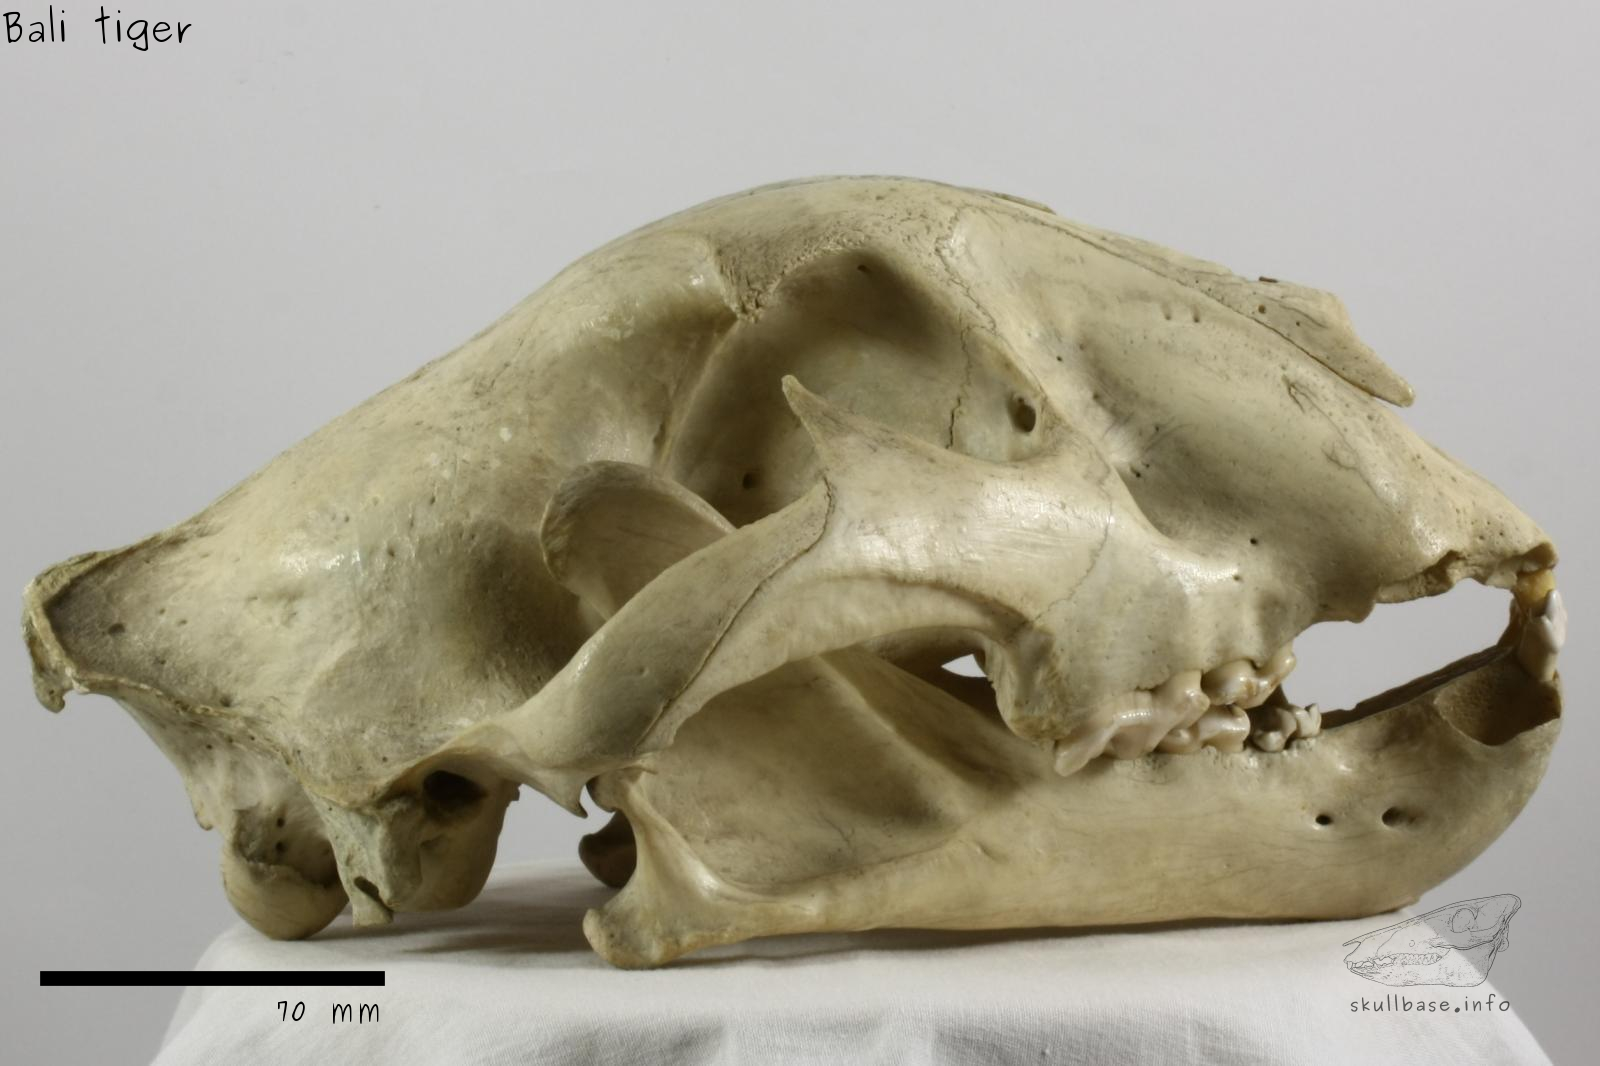 Bali tiger (Panthera tigris sondaica) skull lateral view